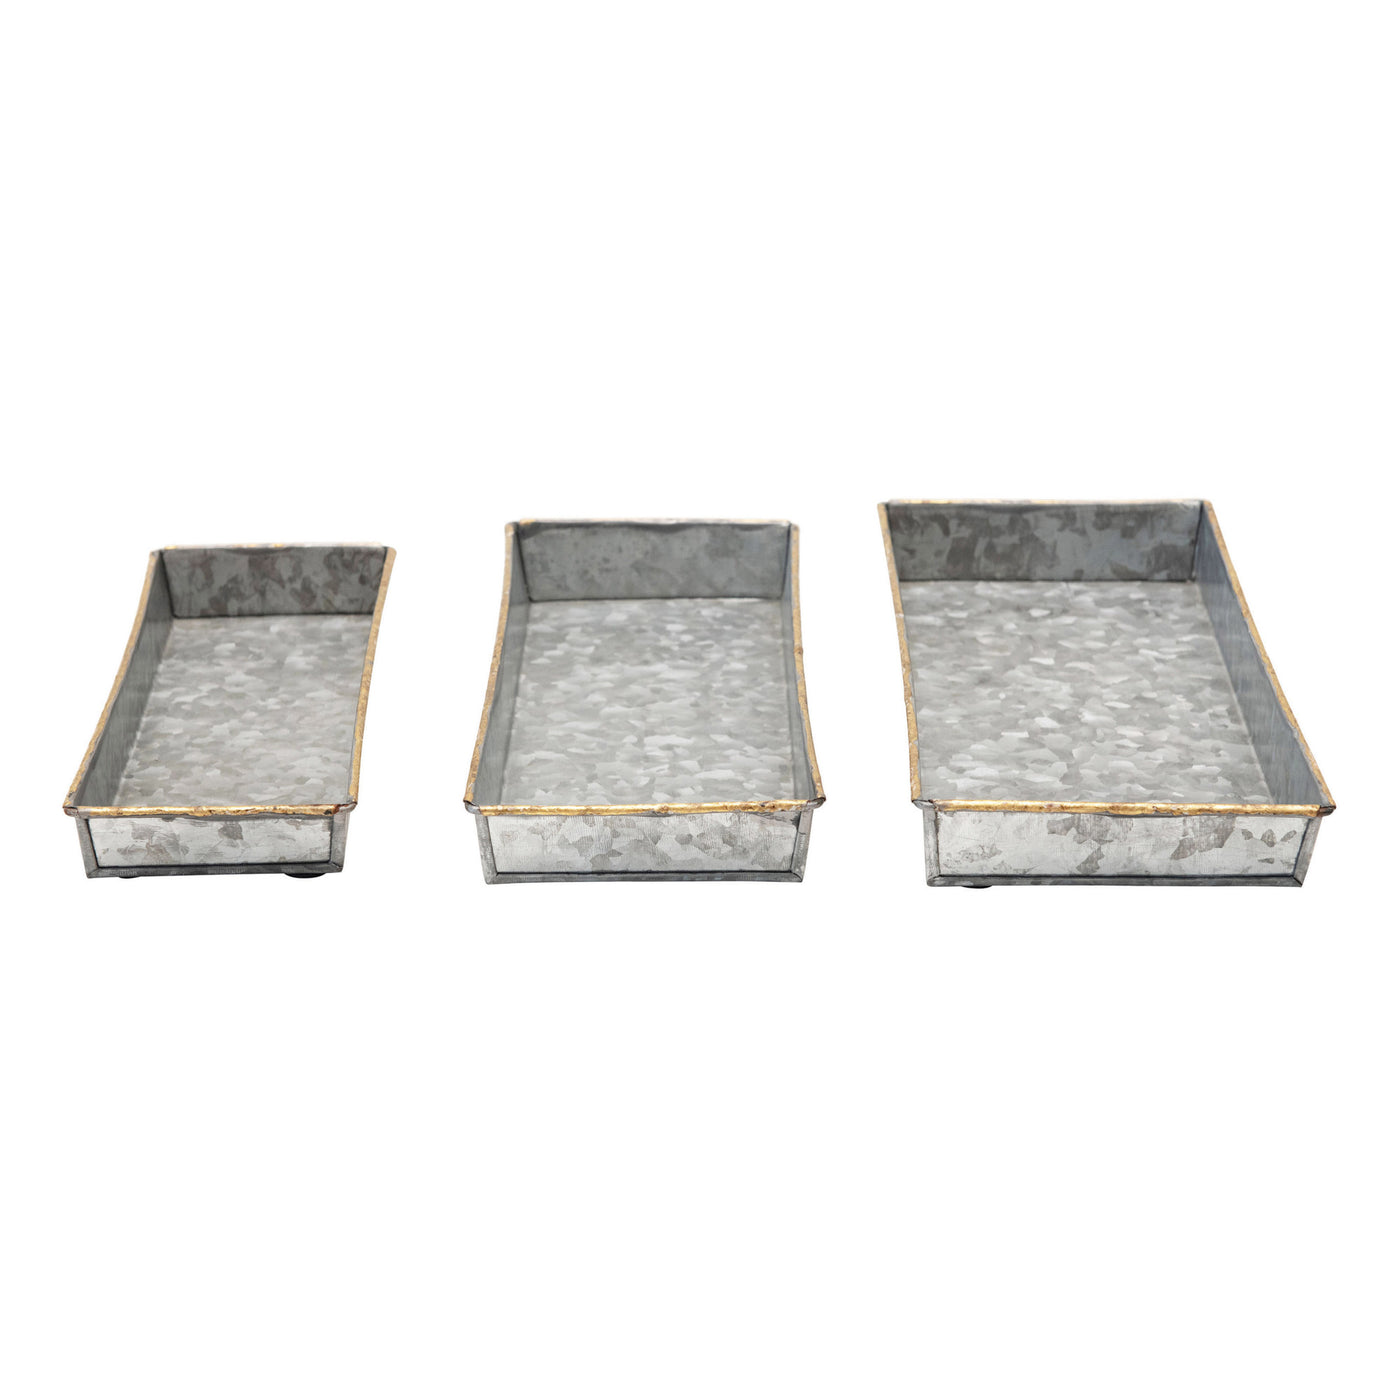 Galvanized Metal Tray Set